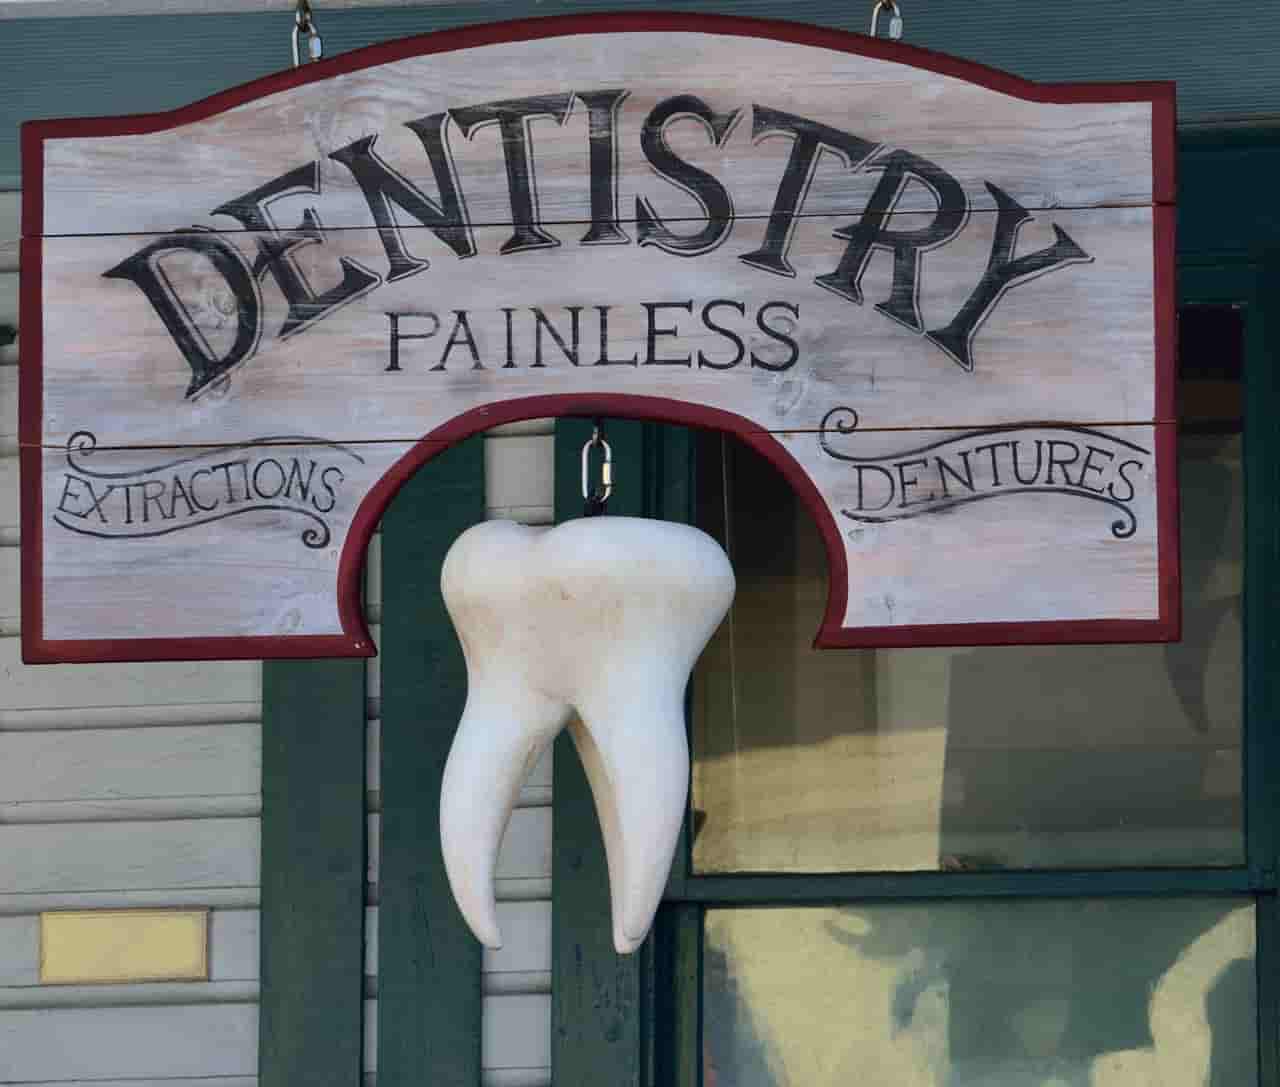 Visit your dentist